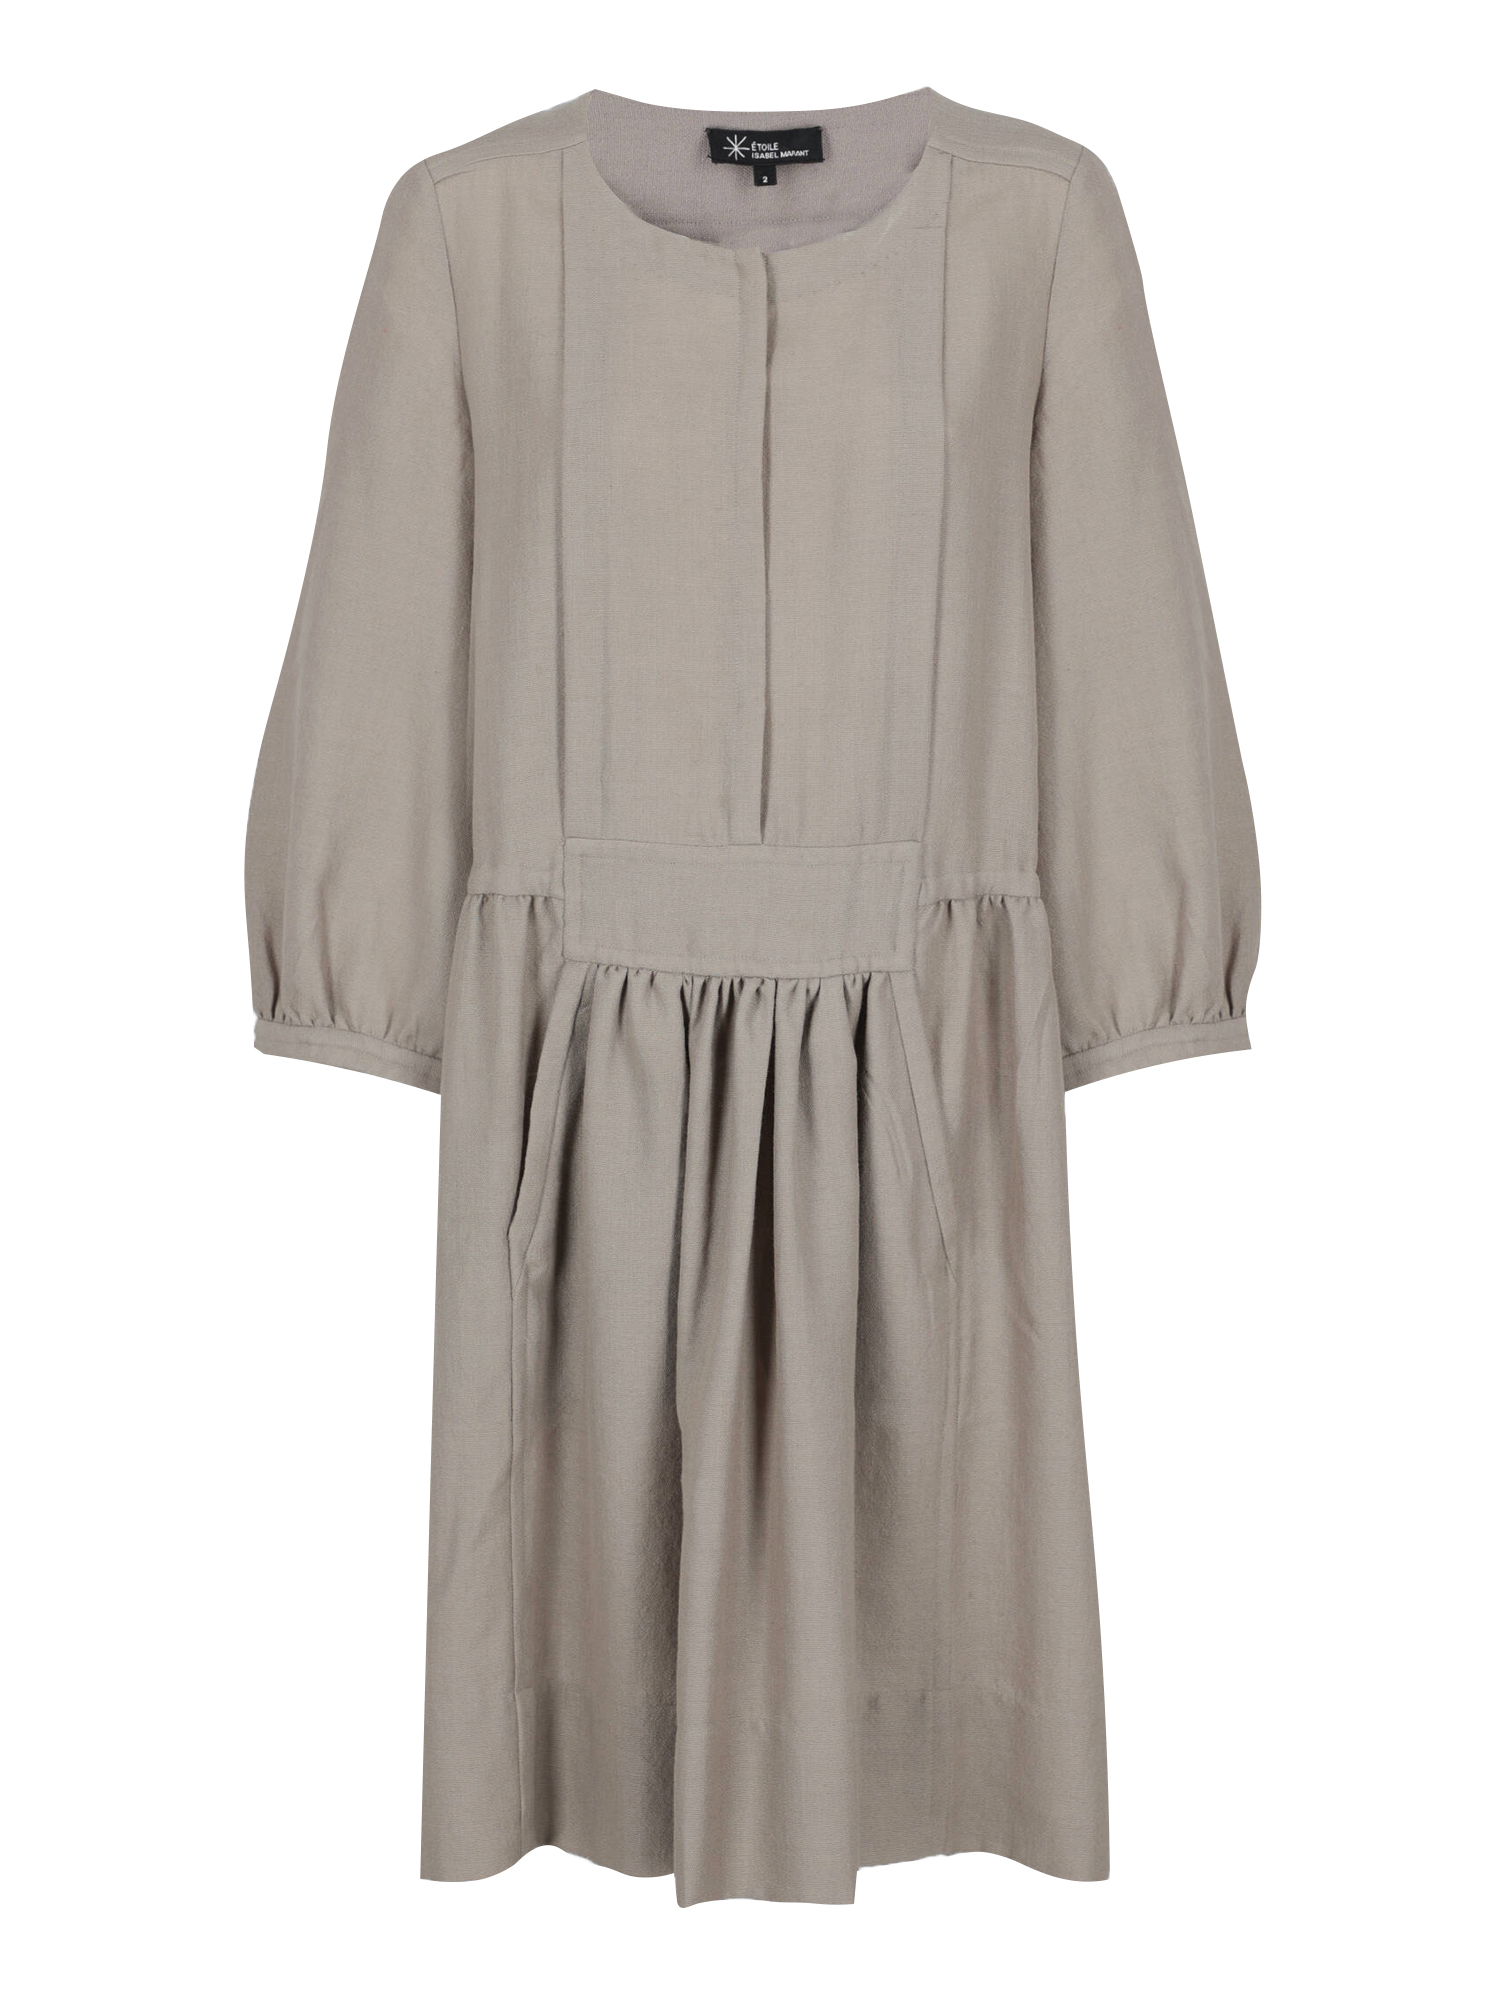 Robes Pour Femme - Isabel Marant Etoile - En Wool Grey - Taille:  -